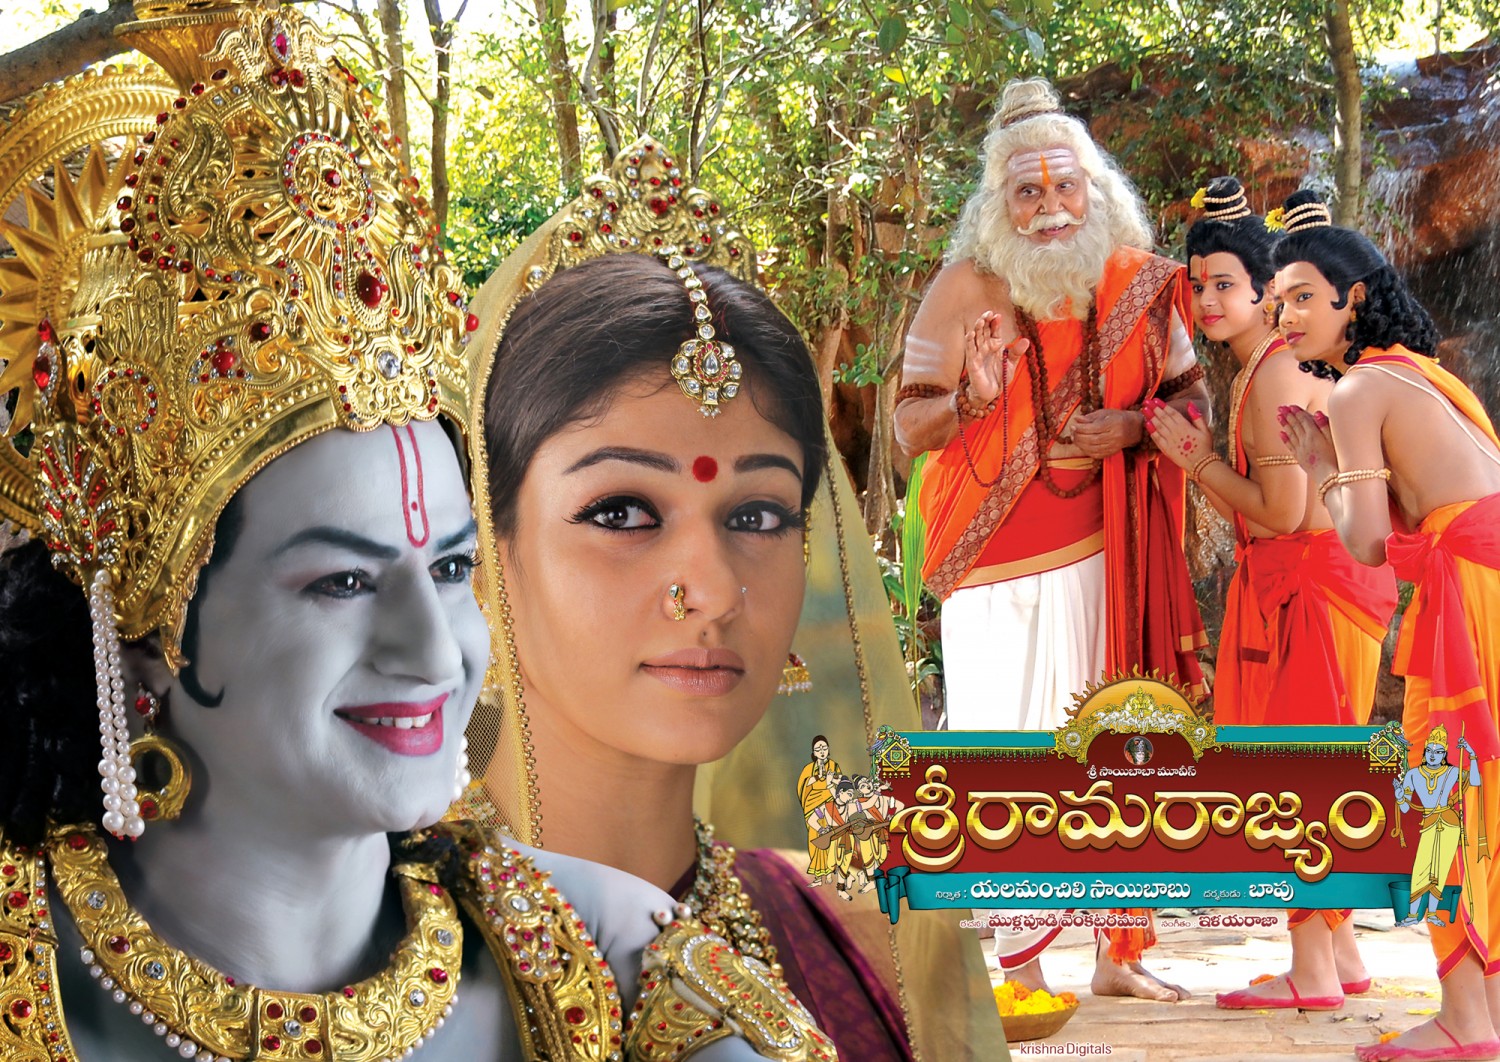 Extra Large Movie Poster Image for Sri Rama Rajyam (#8 of 10)